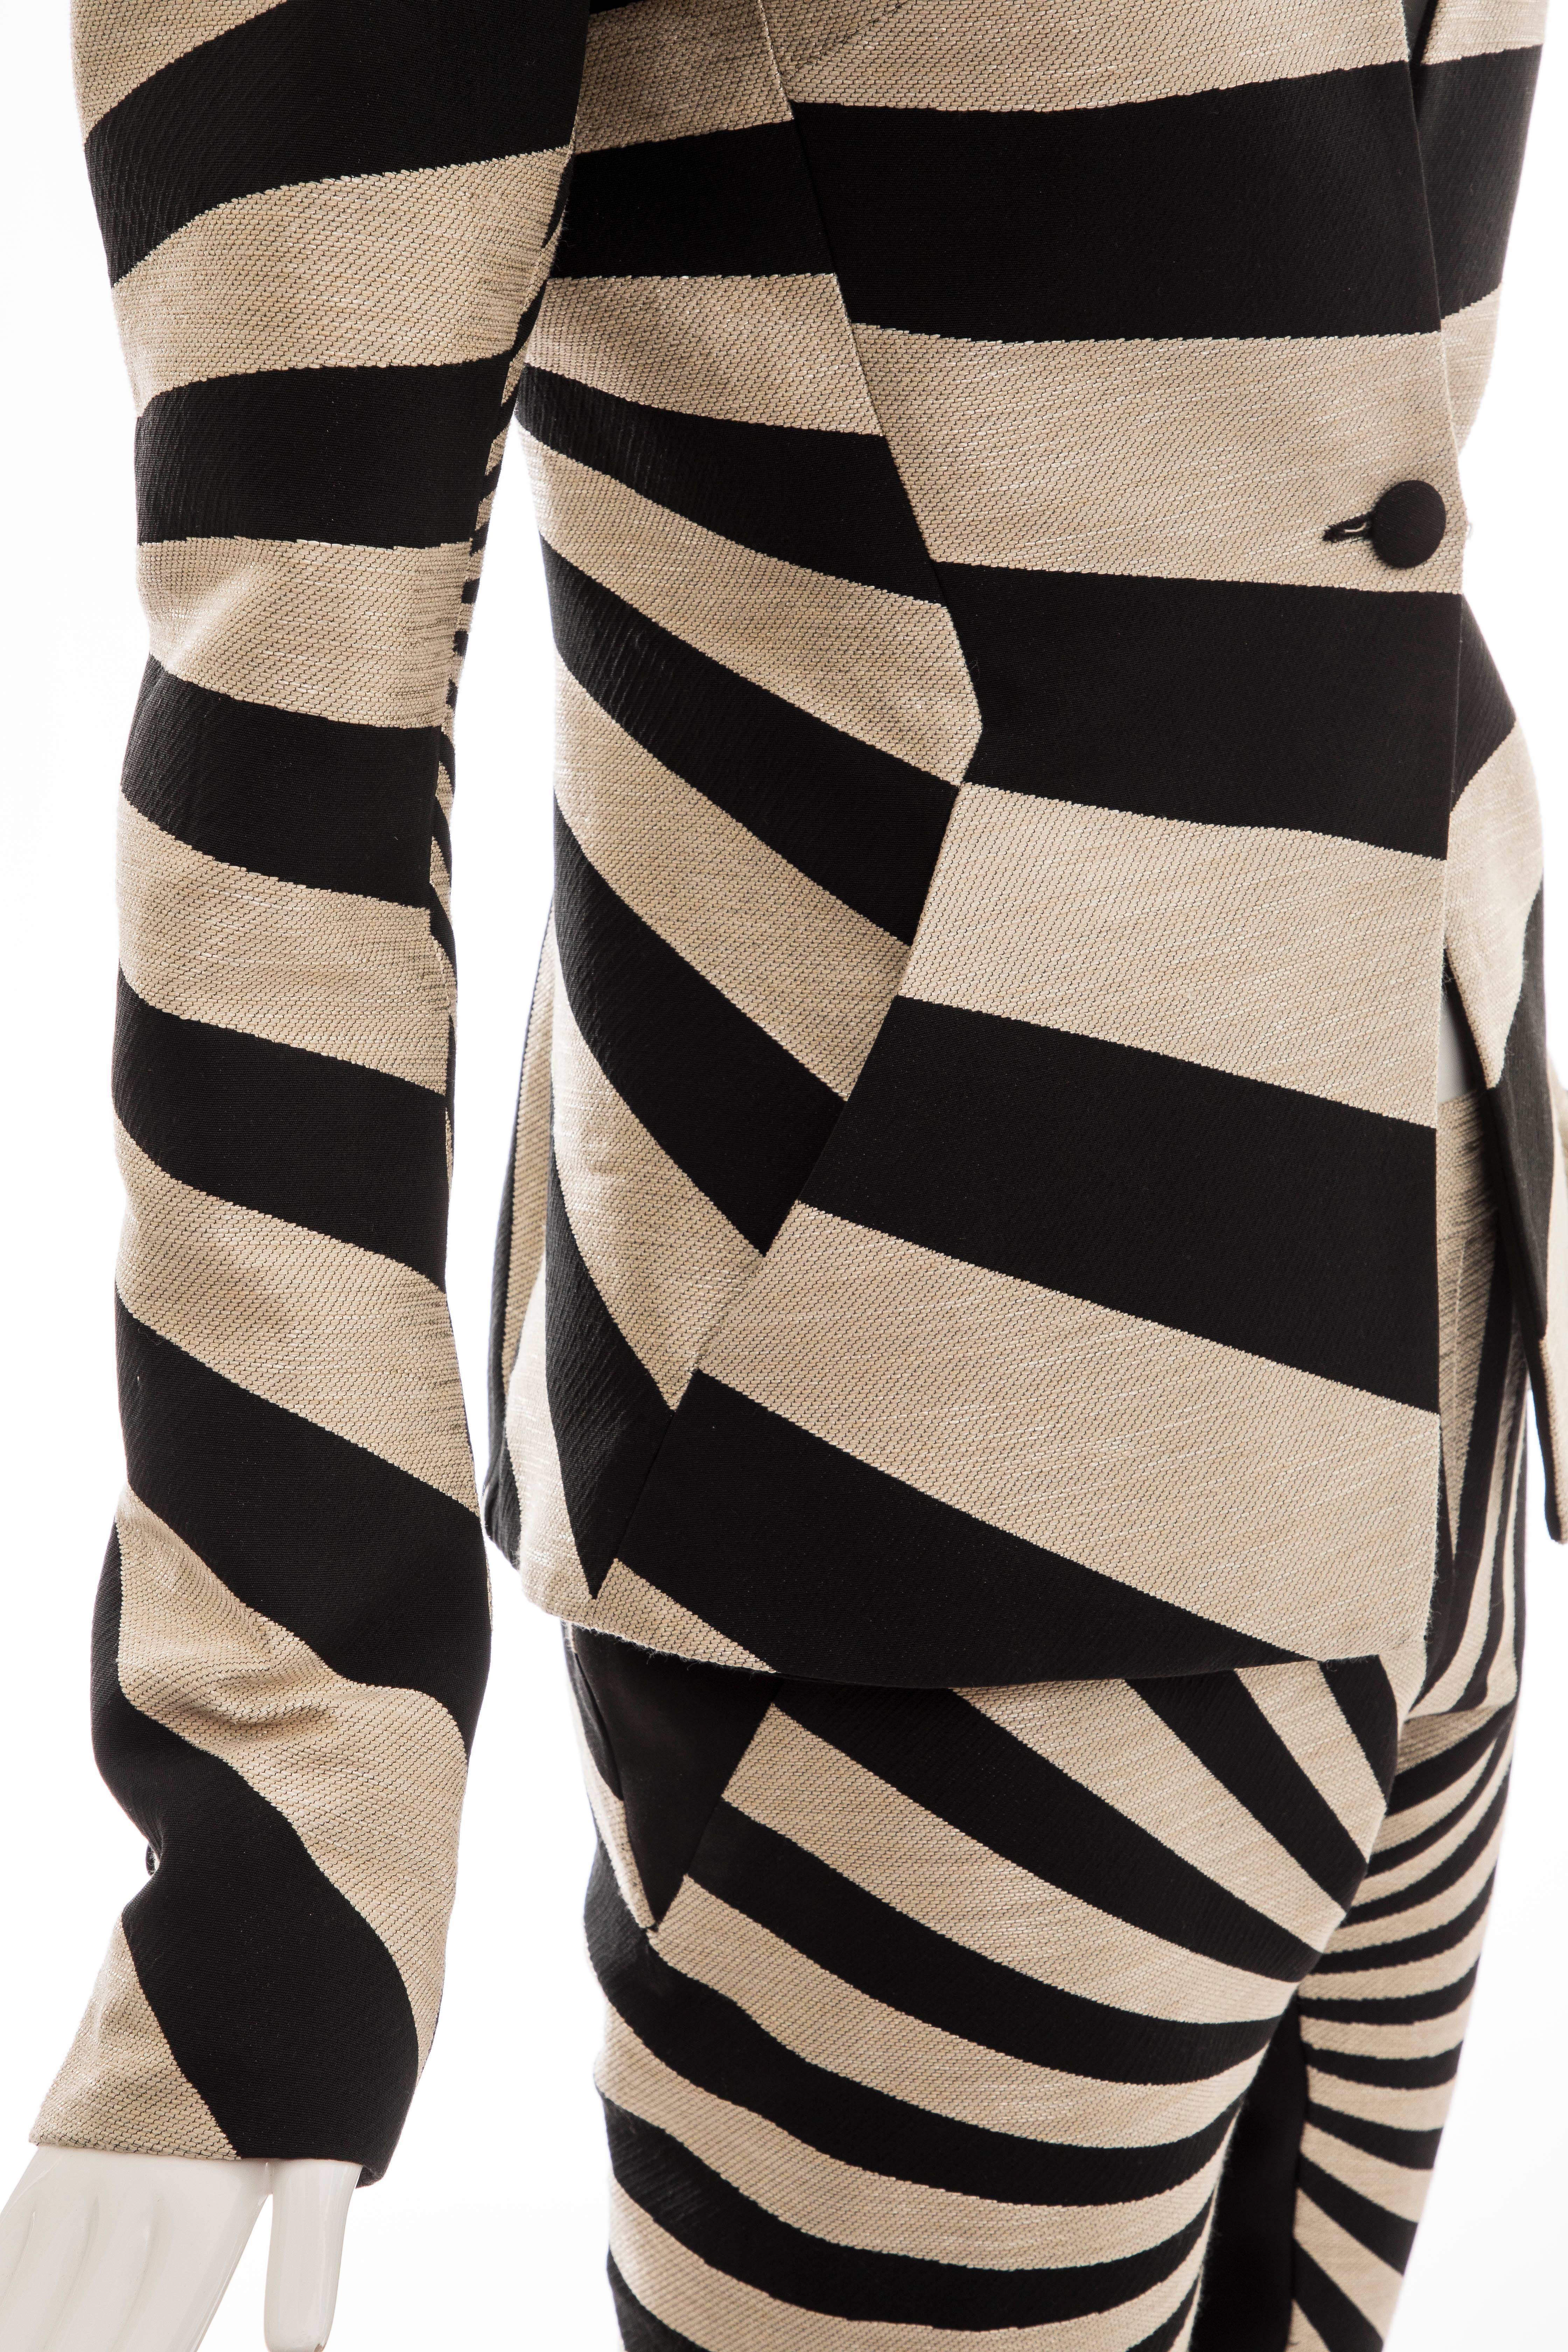 Gareth Pugh Woven Striped Pattern Pantsuit, Spring 2017 For Sale 8